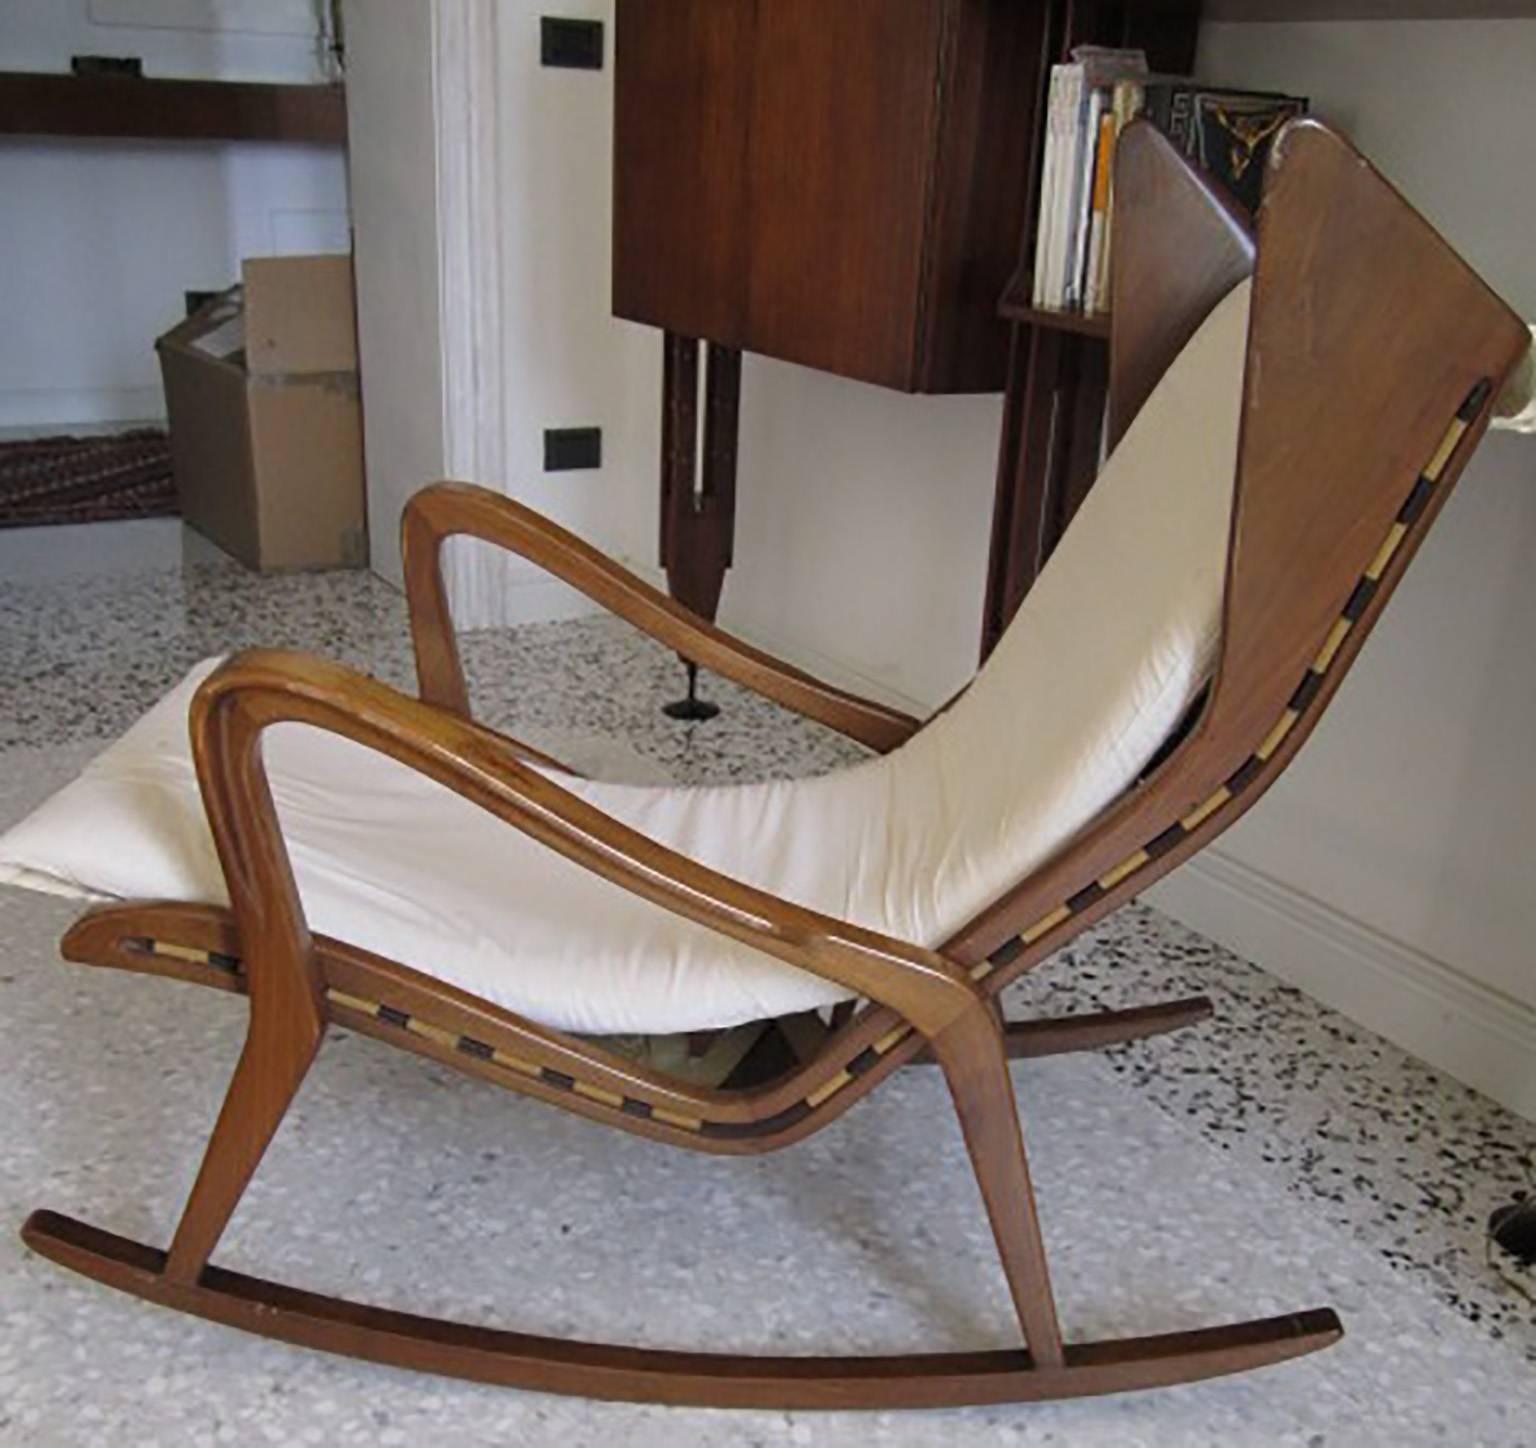 Mid-Century Modern Italian Rocking Chair designed by Studio Tecnico Cassina, Milano, 1955